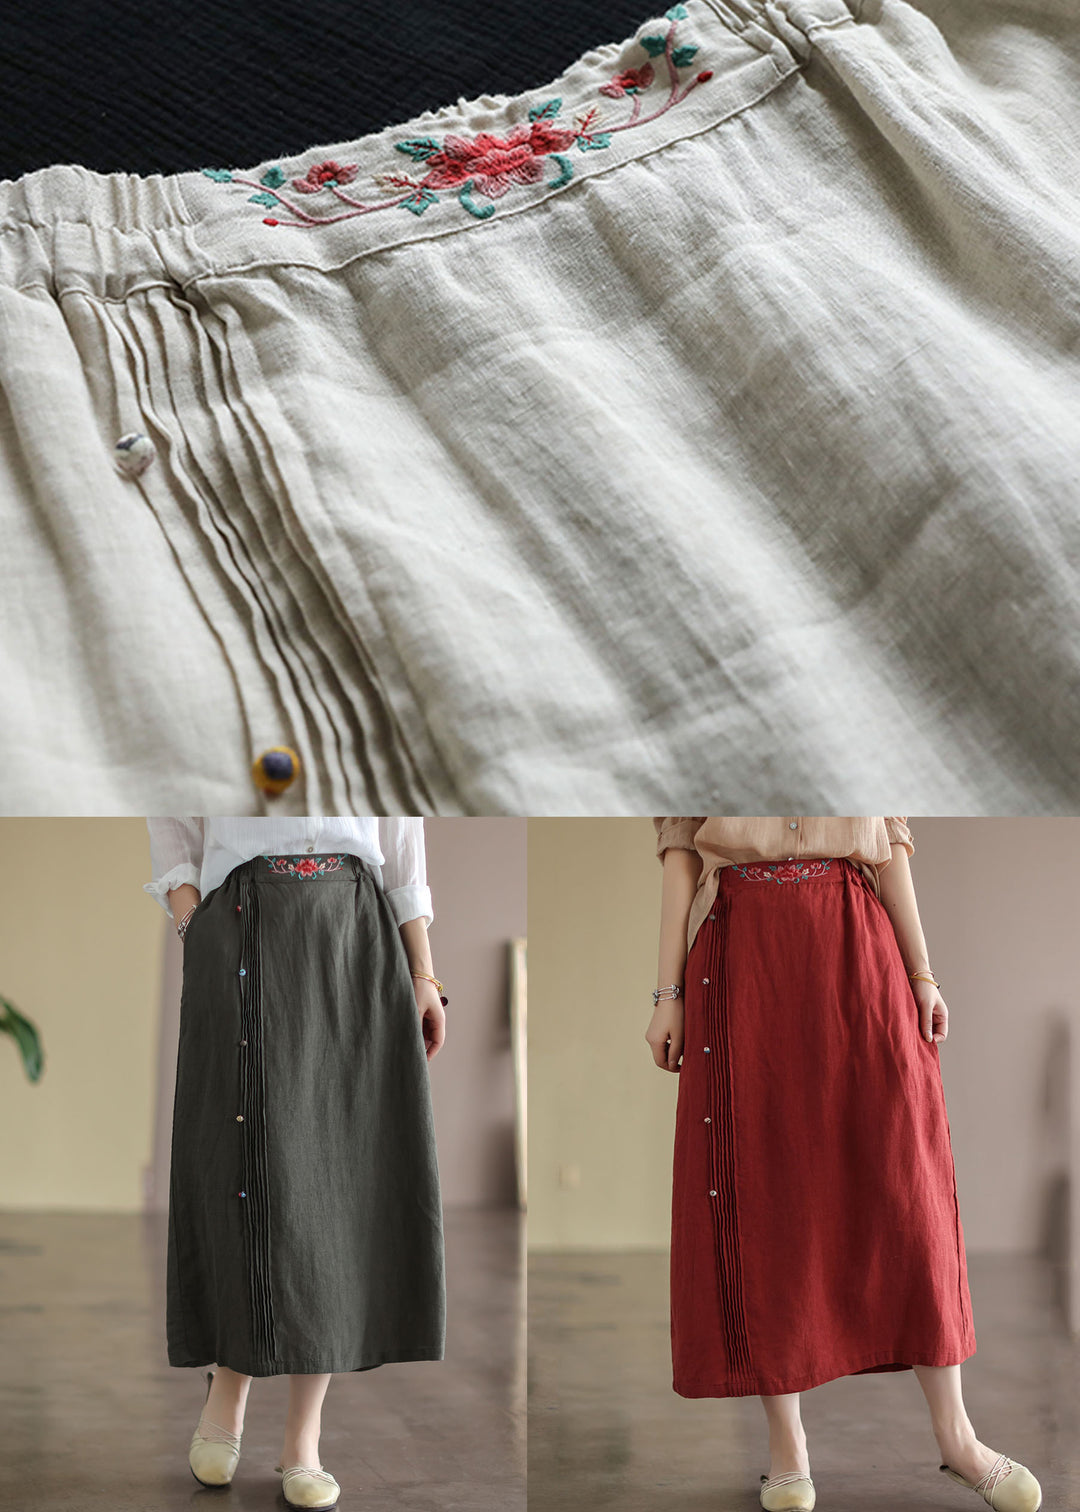 Vintage Beige Embroideried Pockets Patchwork Cotton Skirts Summer